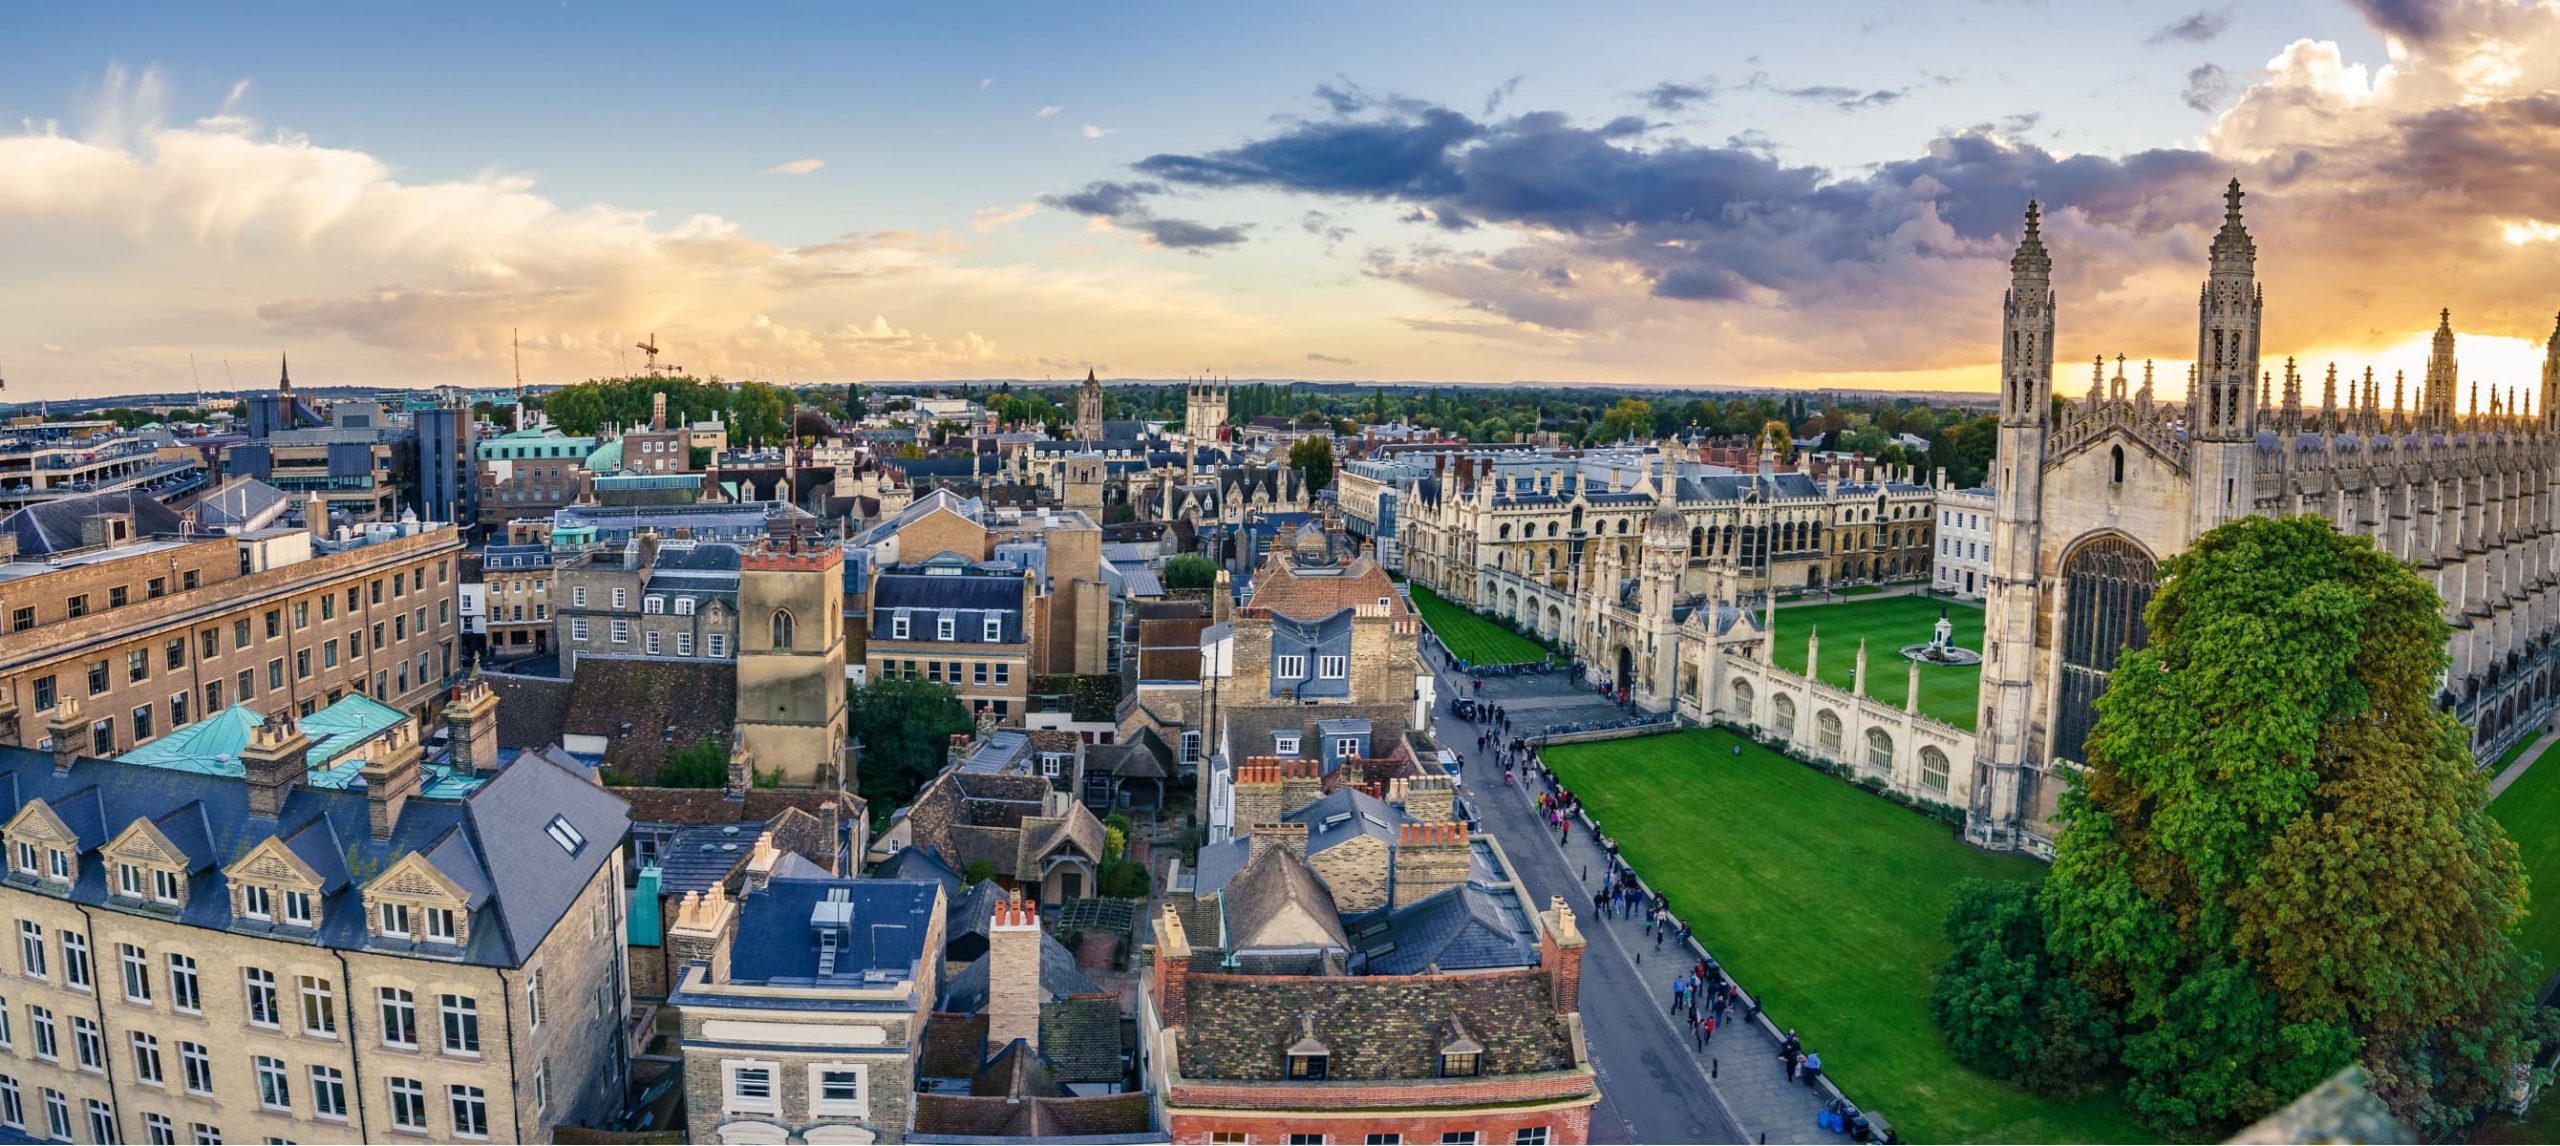 The Most Amazing Cambridge Hotels